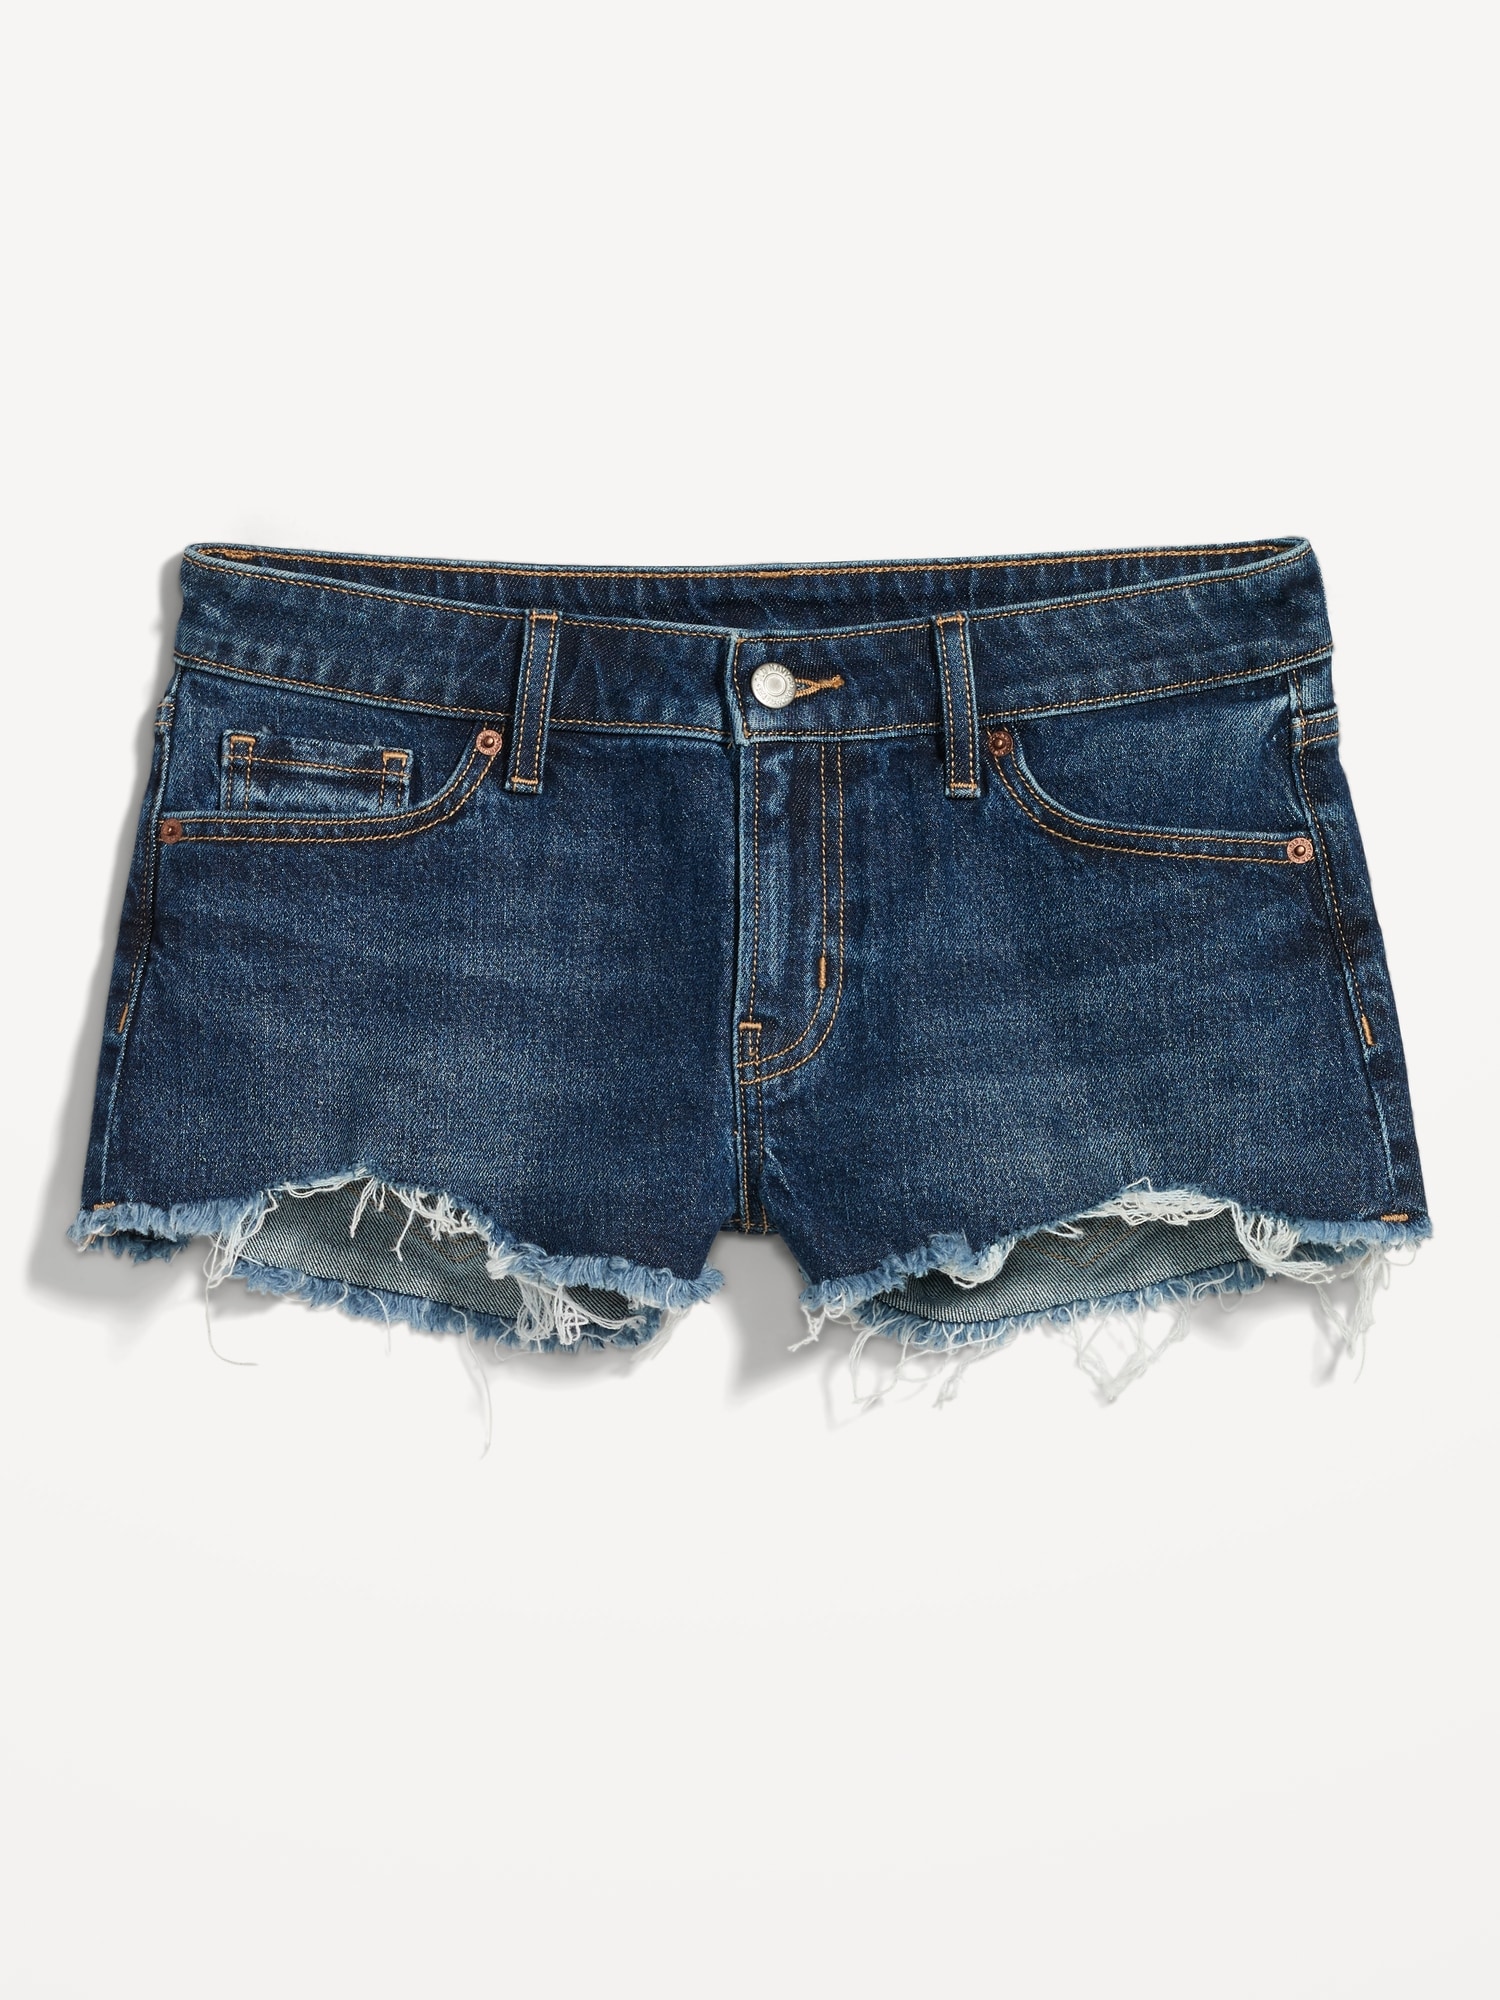 Low-Rise OG Straight Super-Short Cut-Off Jean Shorts -- 1.5-inch